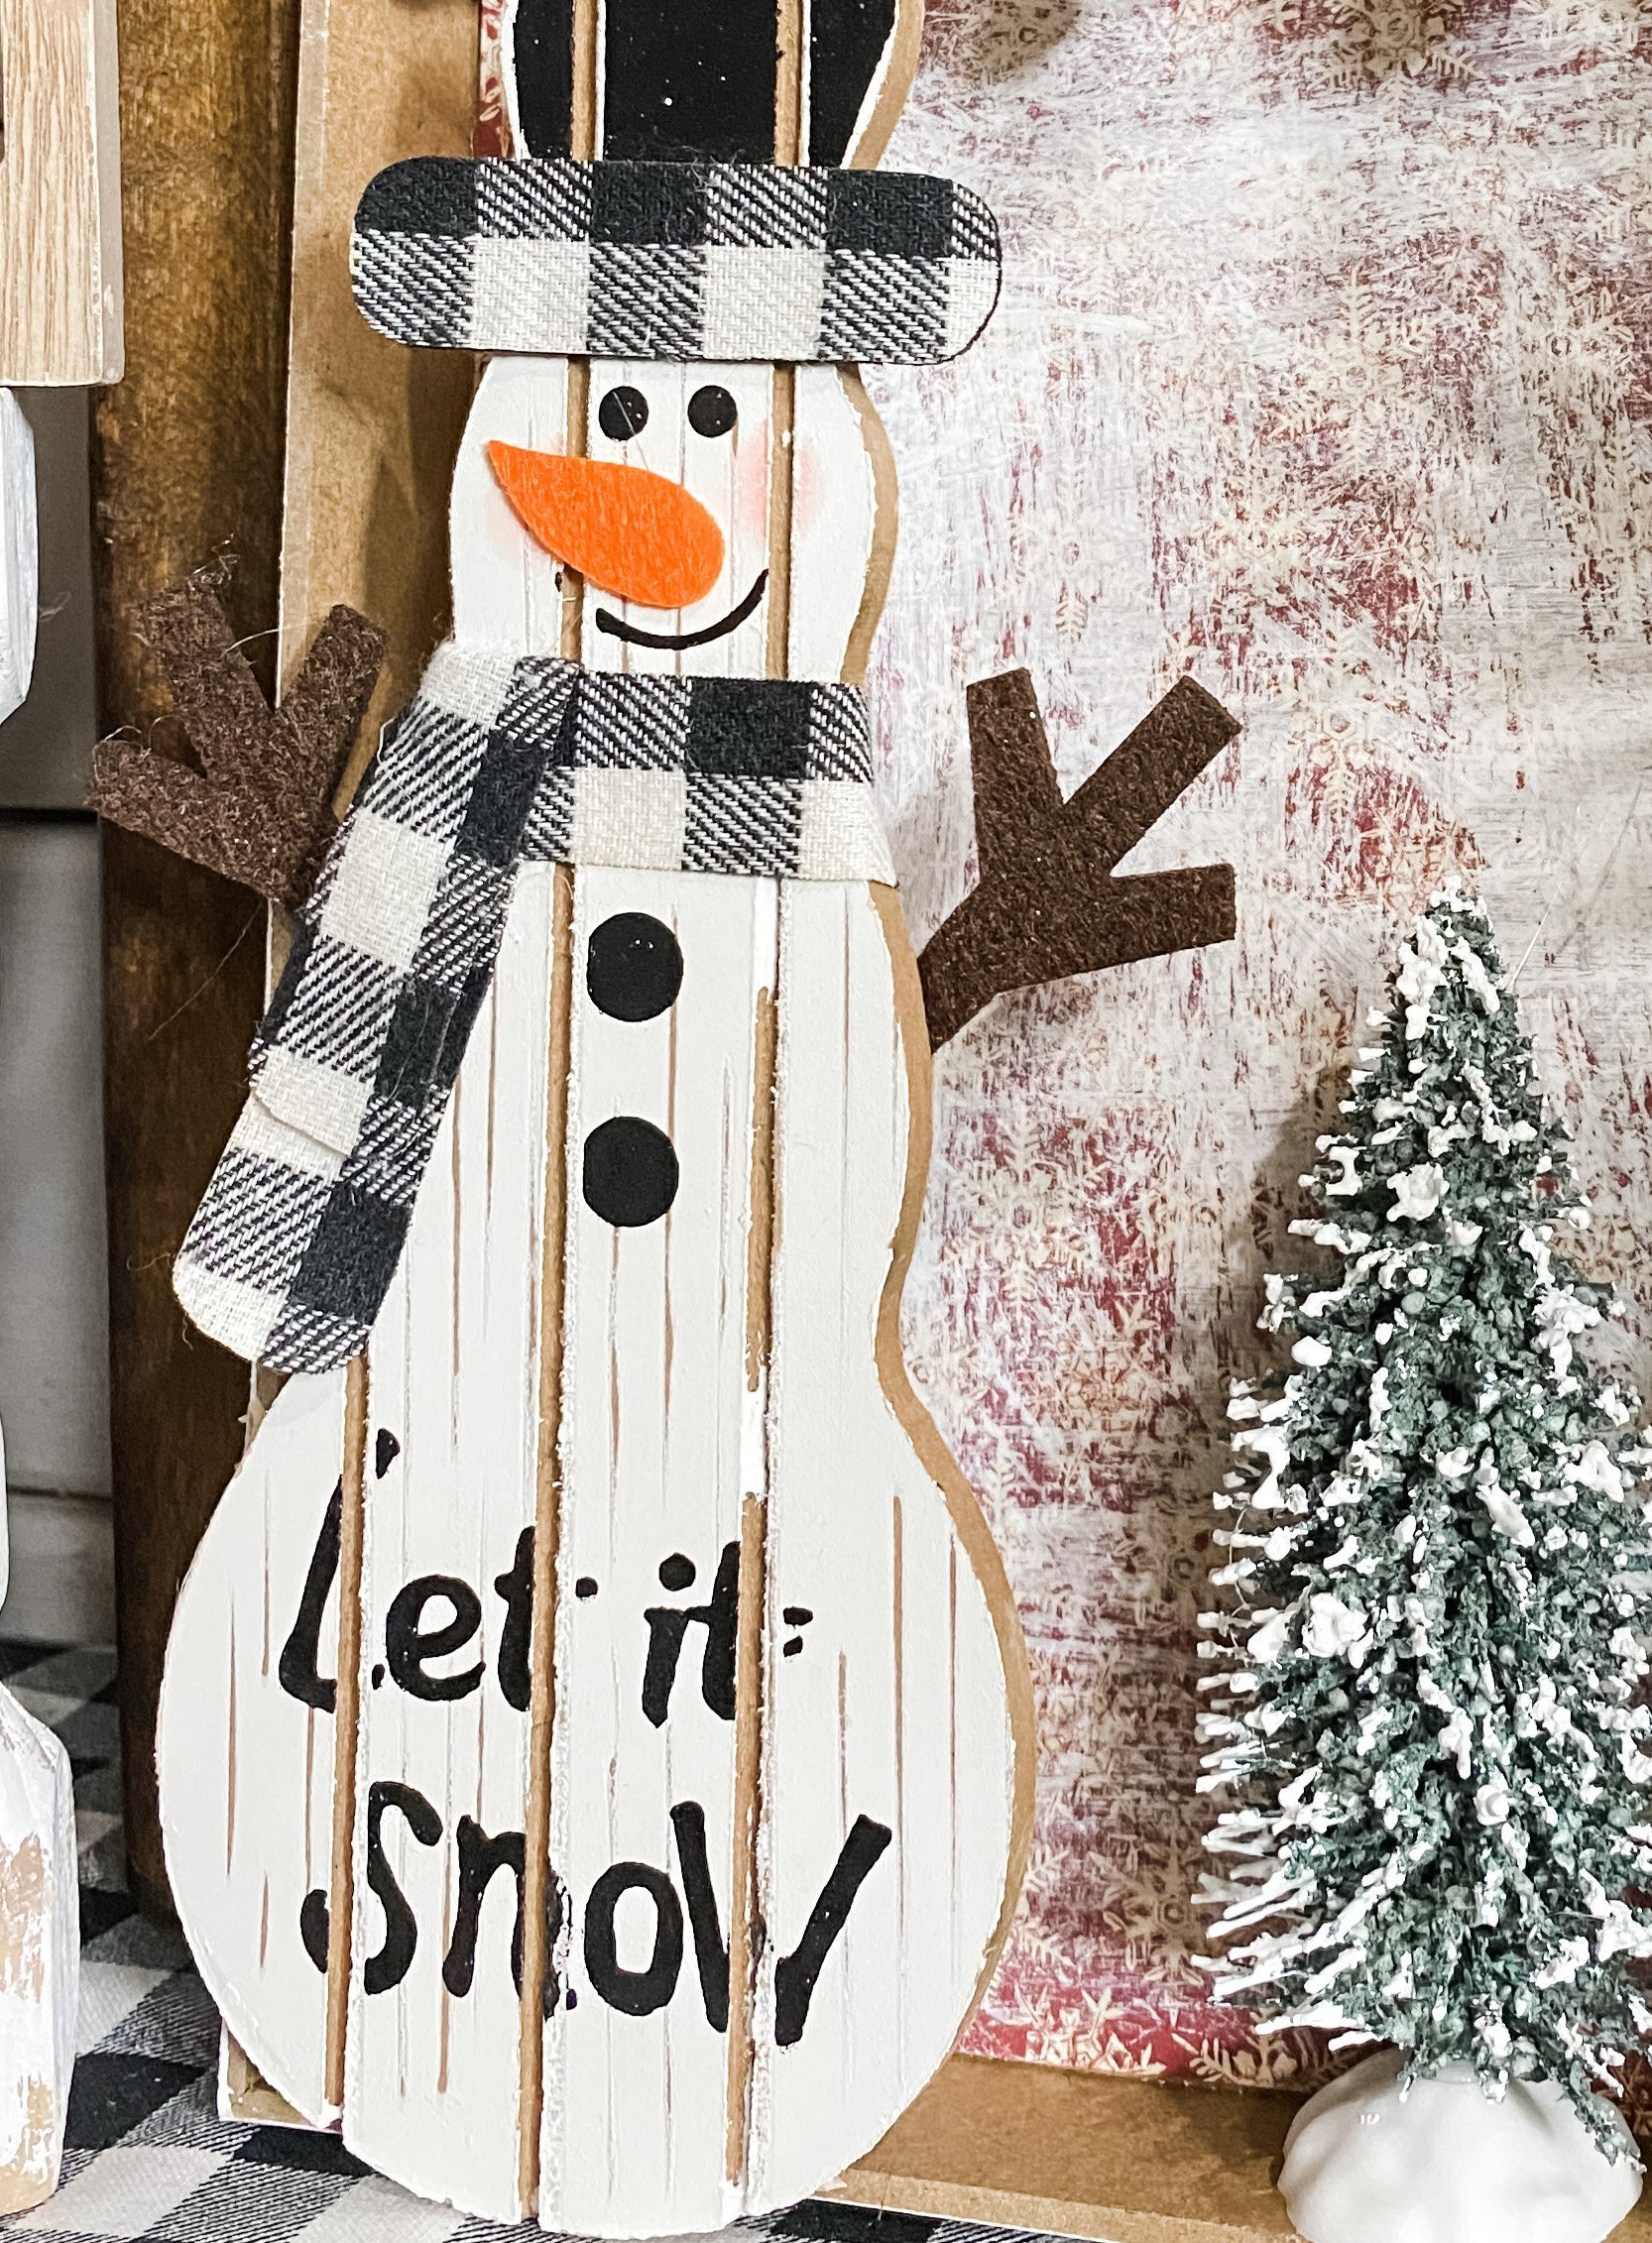 Winter Scene with a Snowman DIY Decor